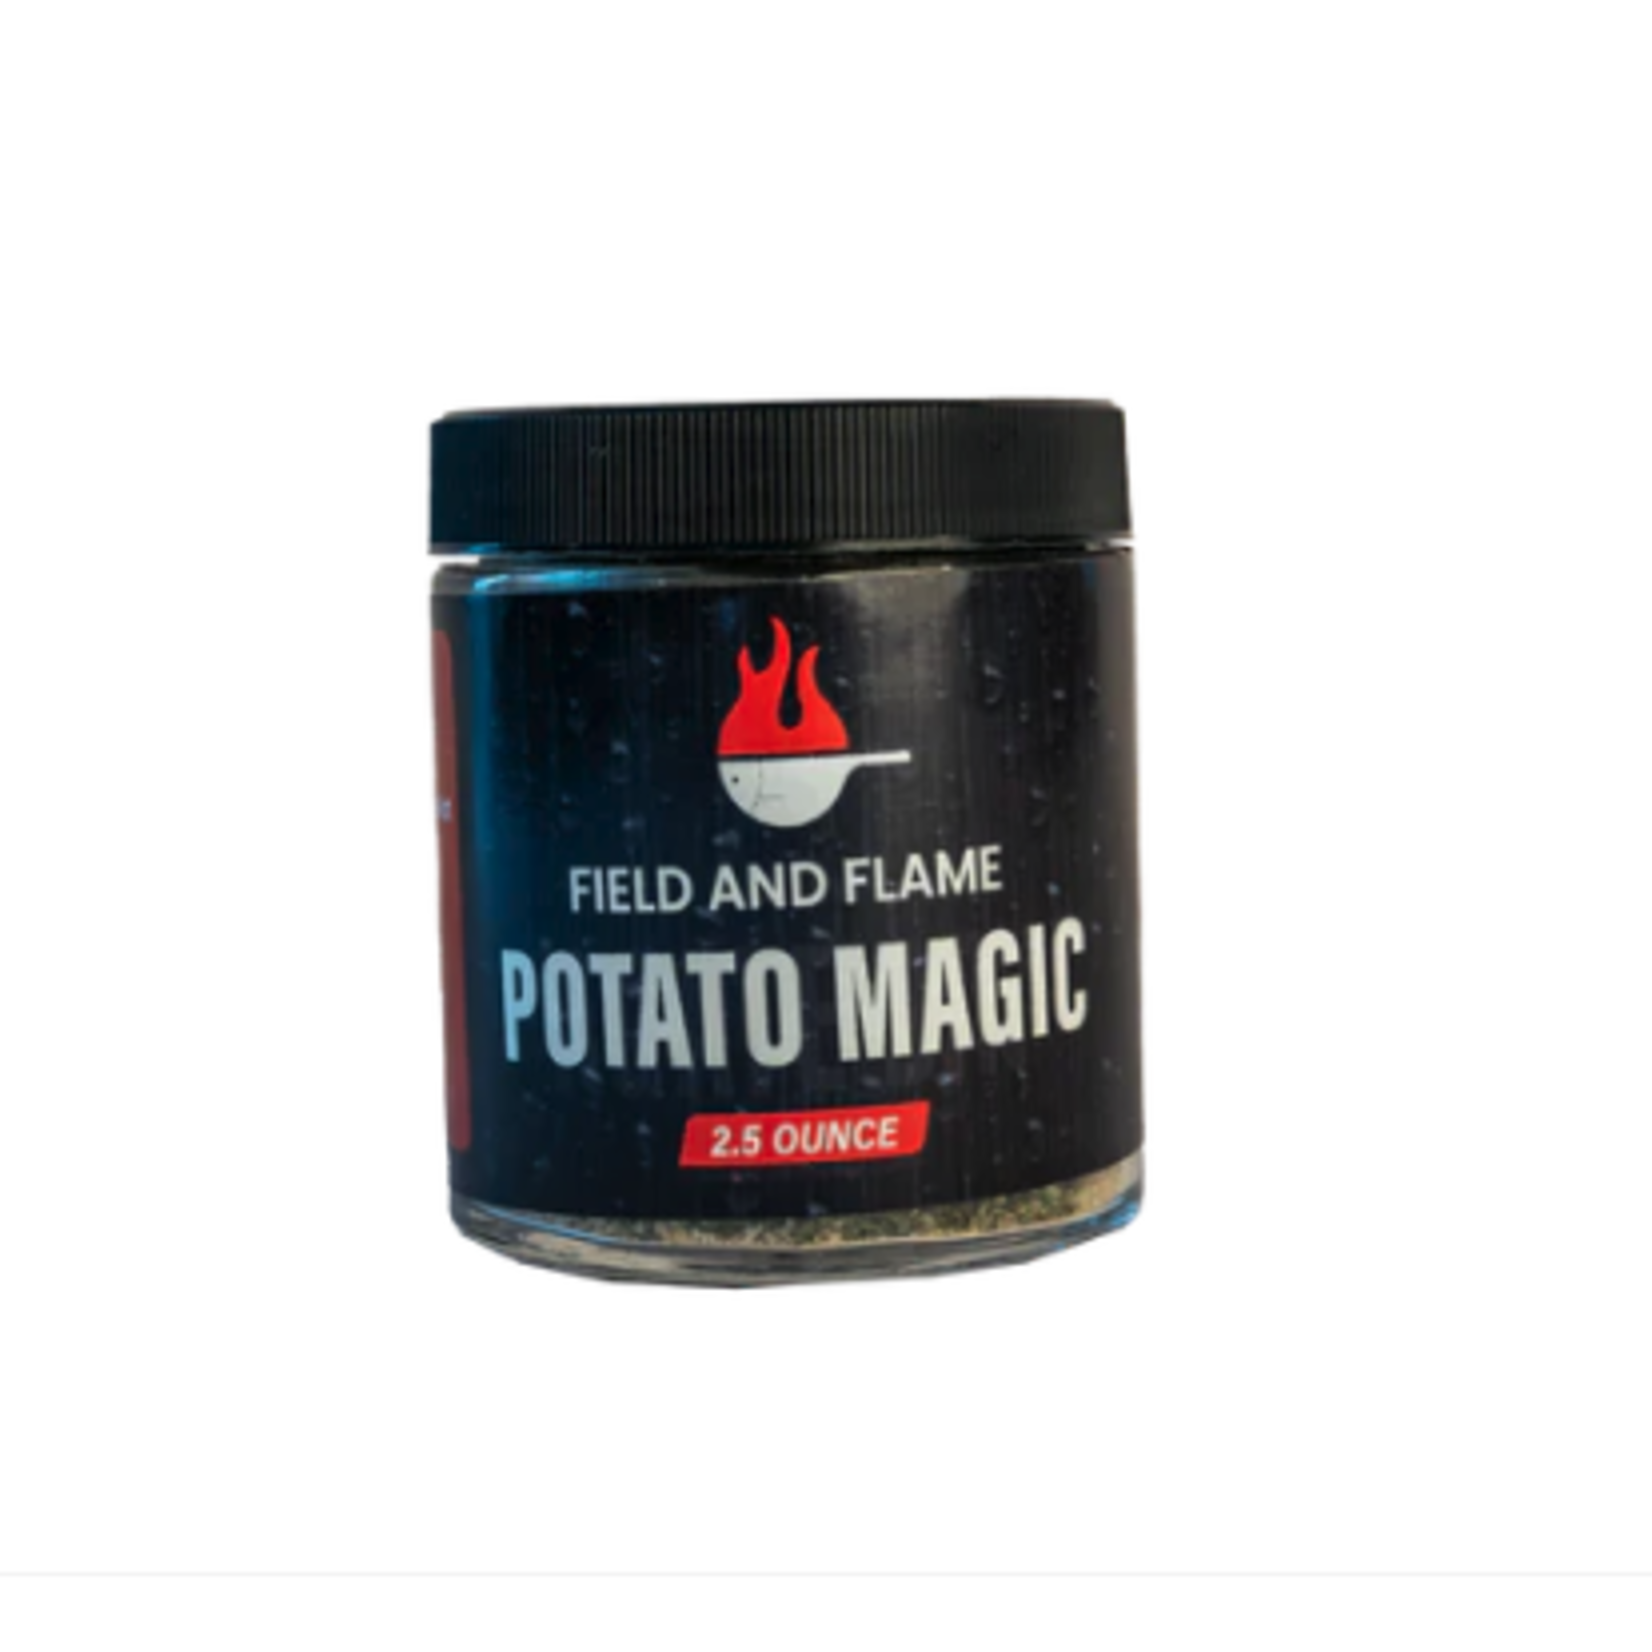 Field & Flame Potato Magic, Field and Flame